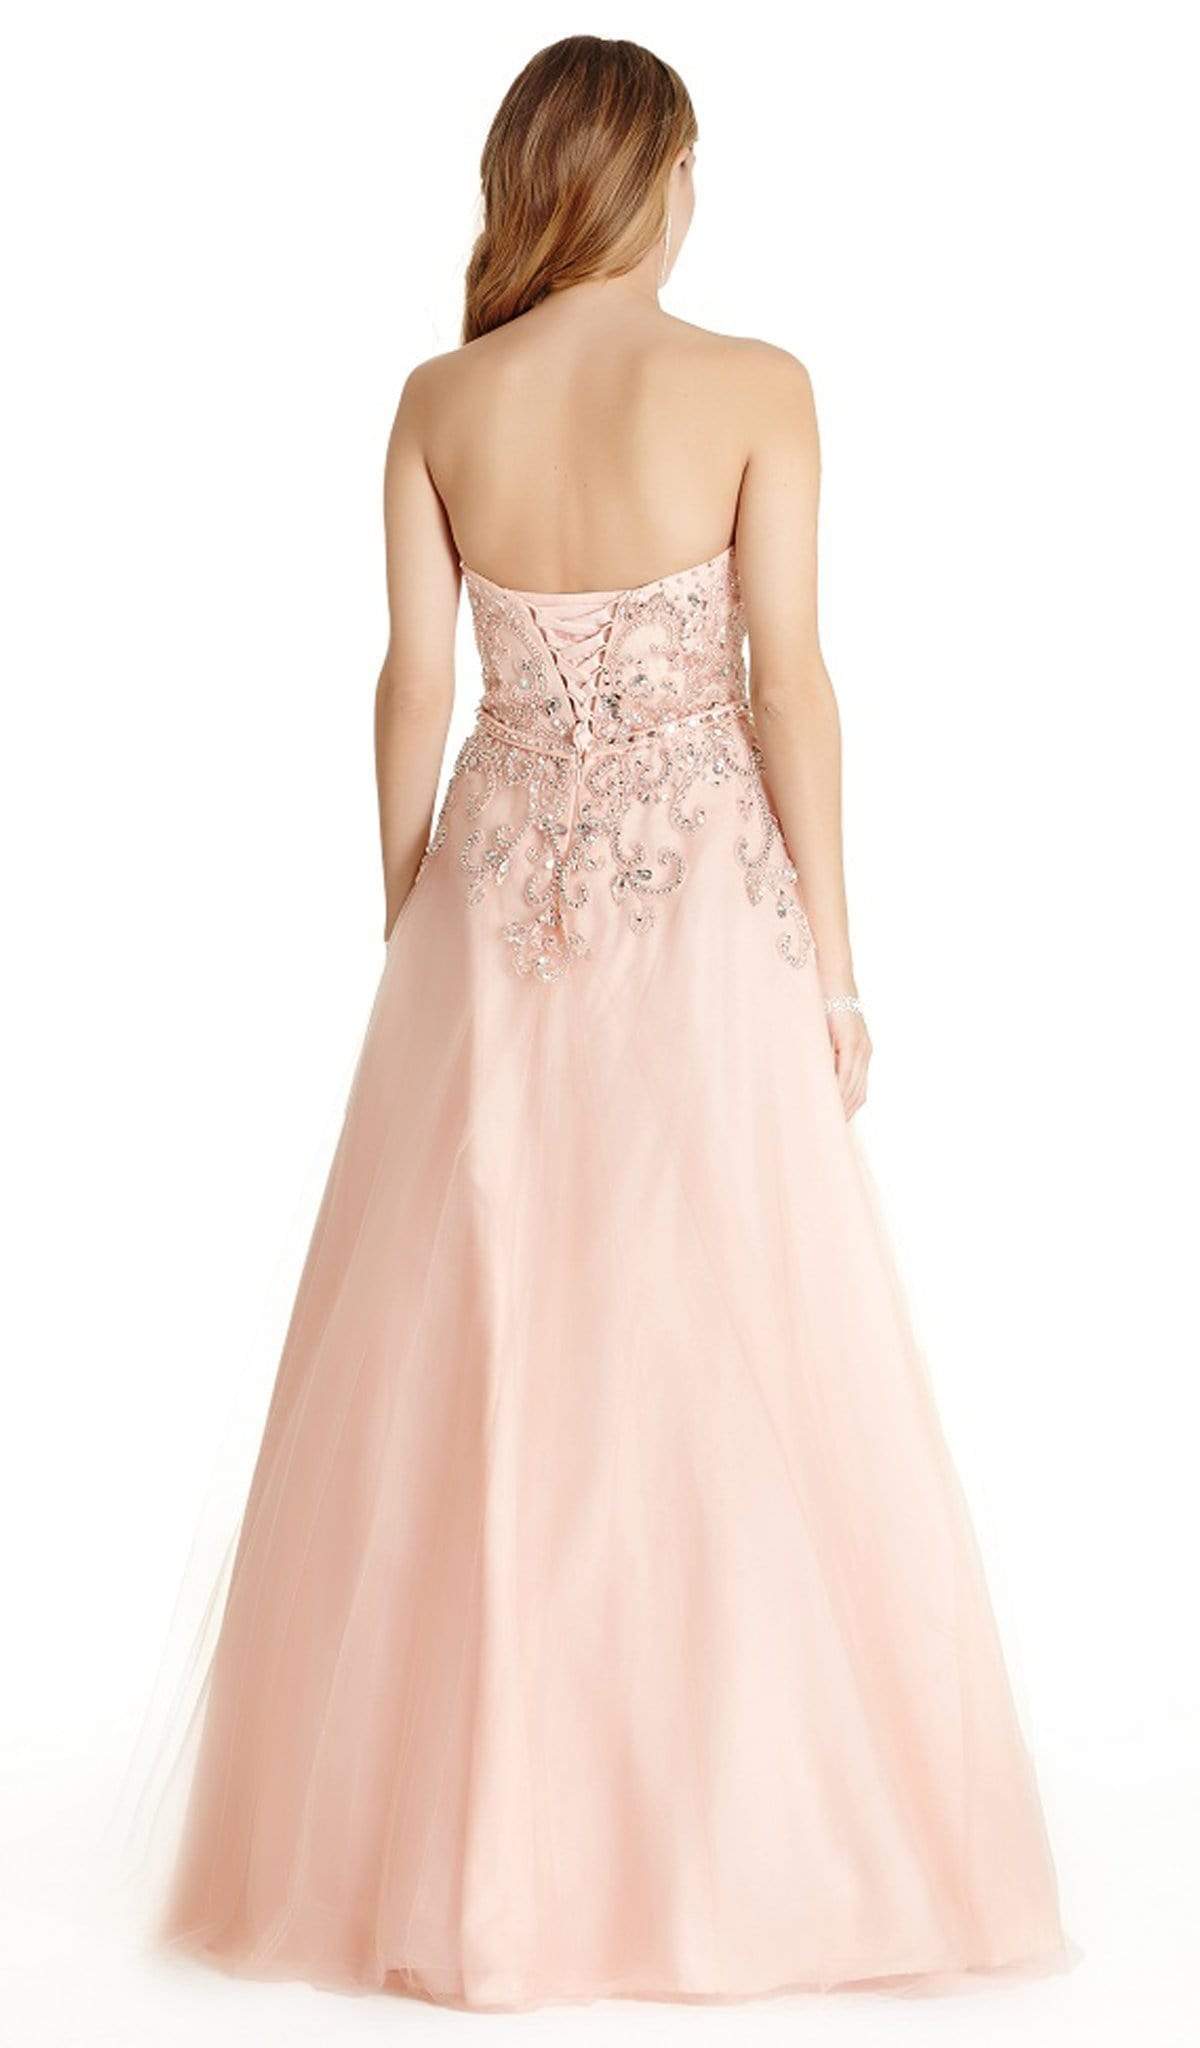 Bejeweled Sweetheart Ballgown Dress